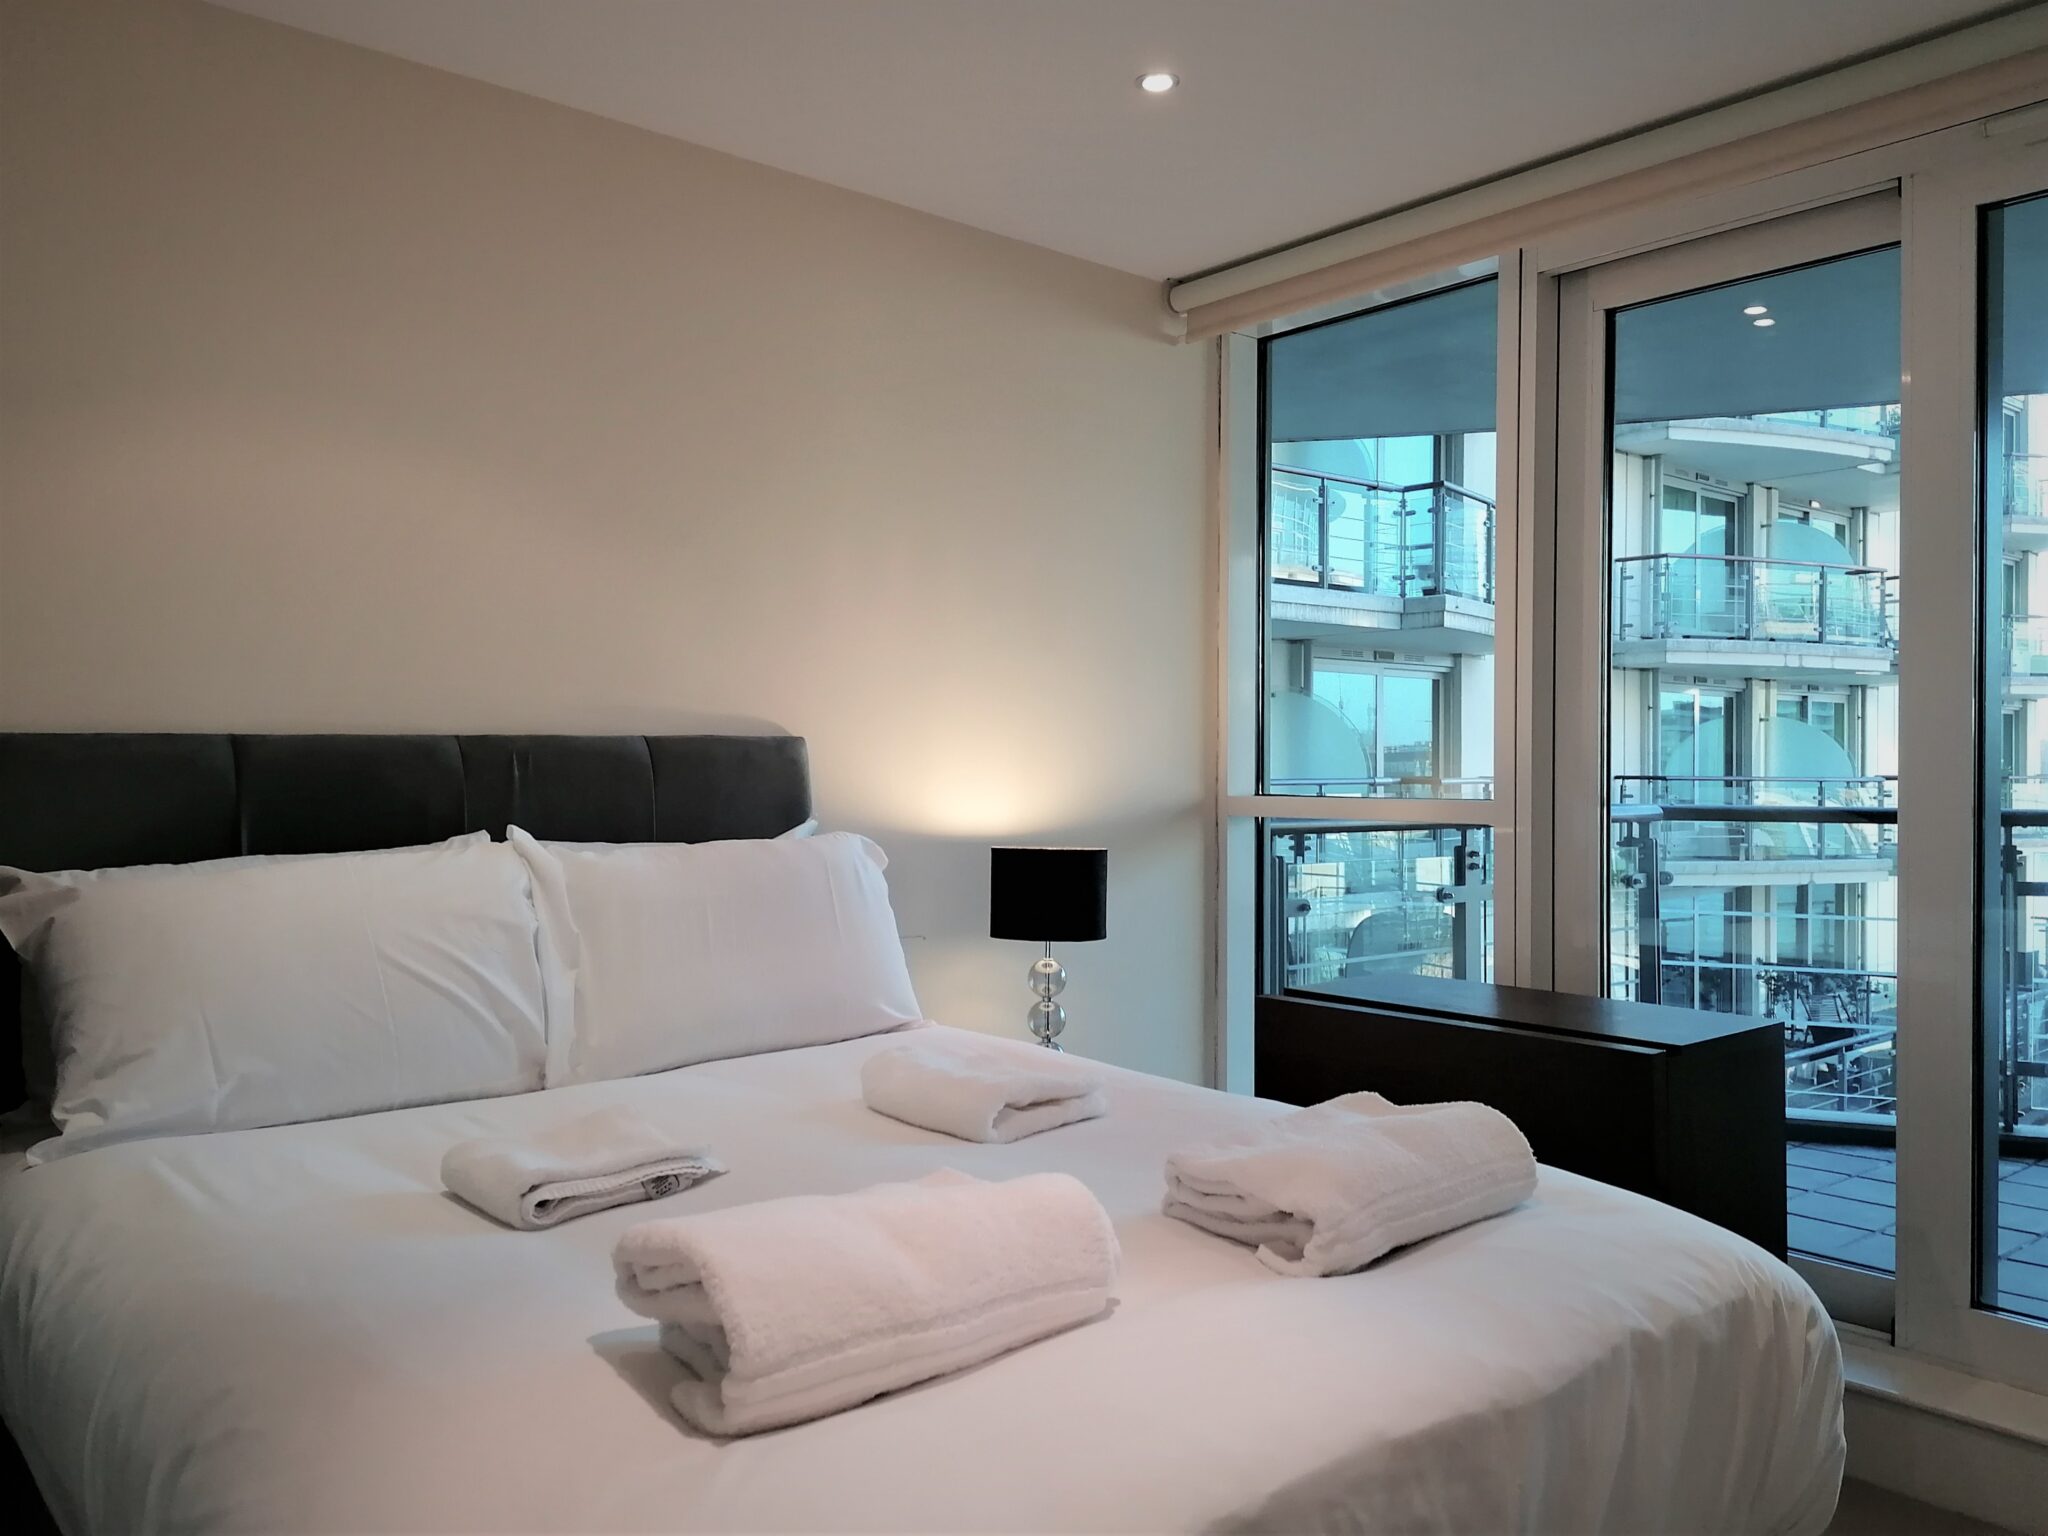 Harrow Apartments - West London Serviced Apartments - London | Urban Stay